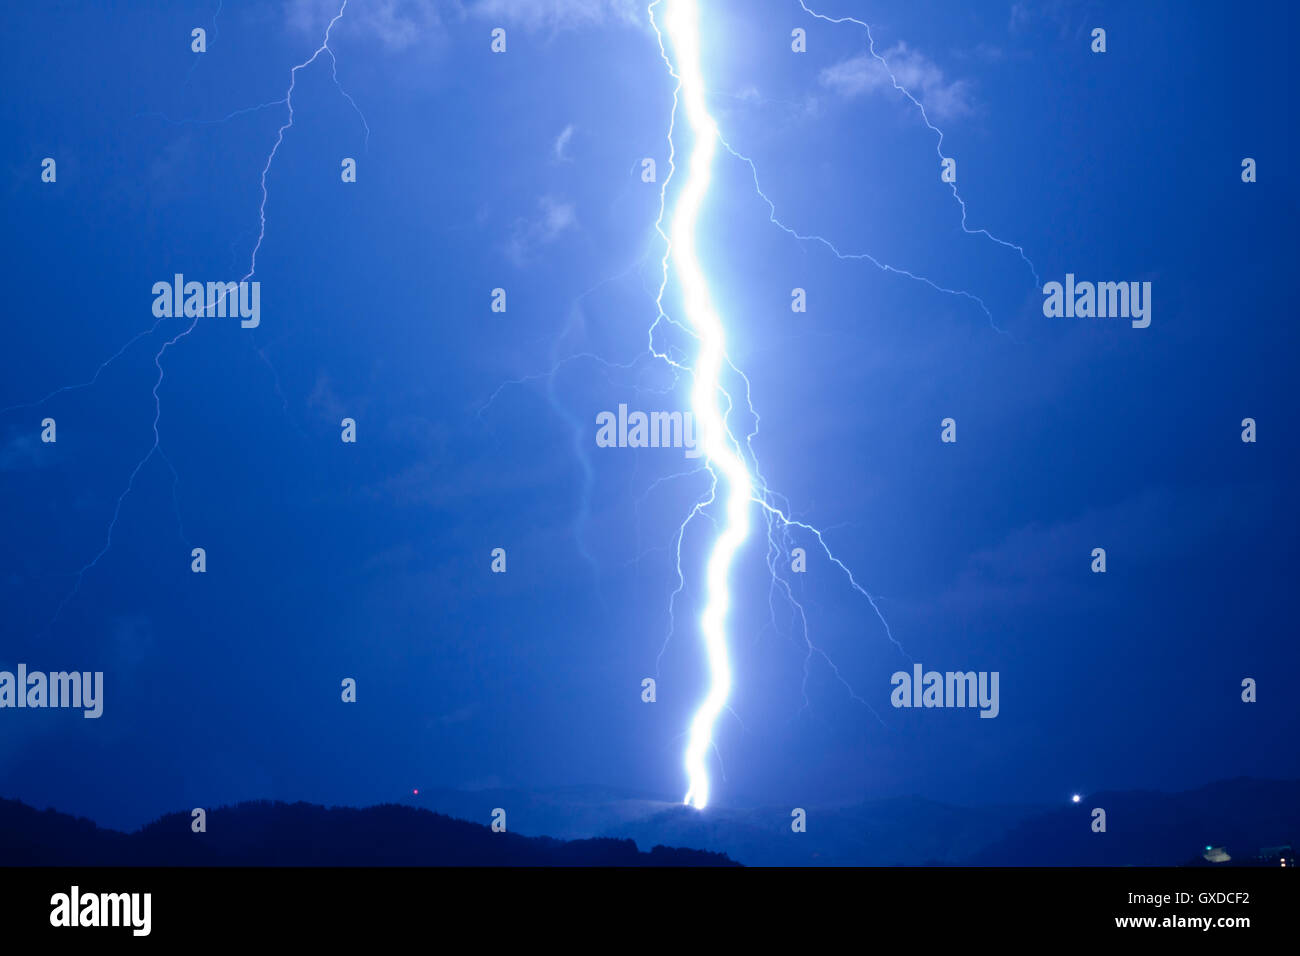 Lightning Strikes hit over night landscape Stock Photo